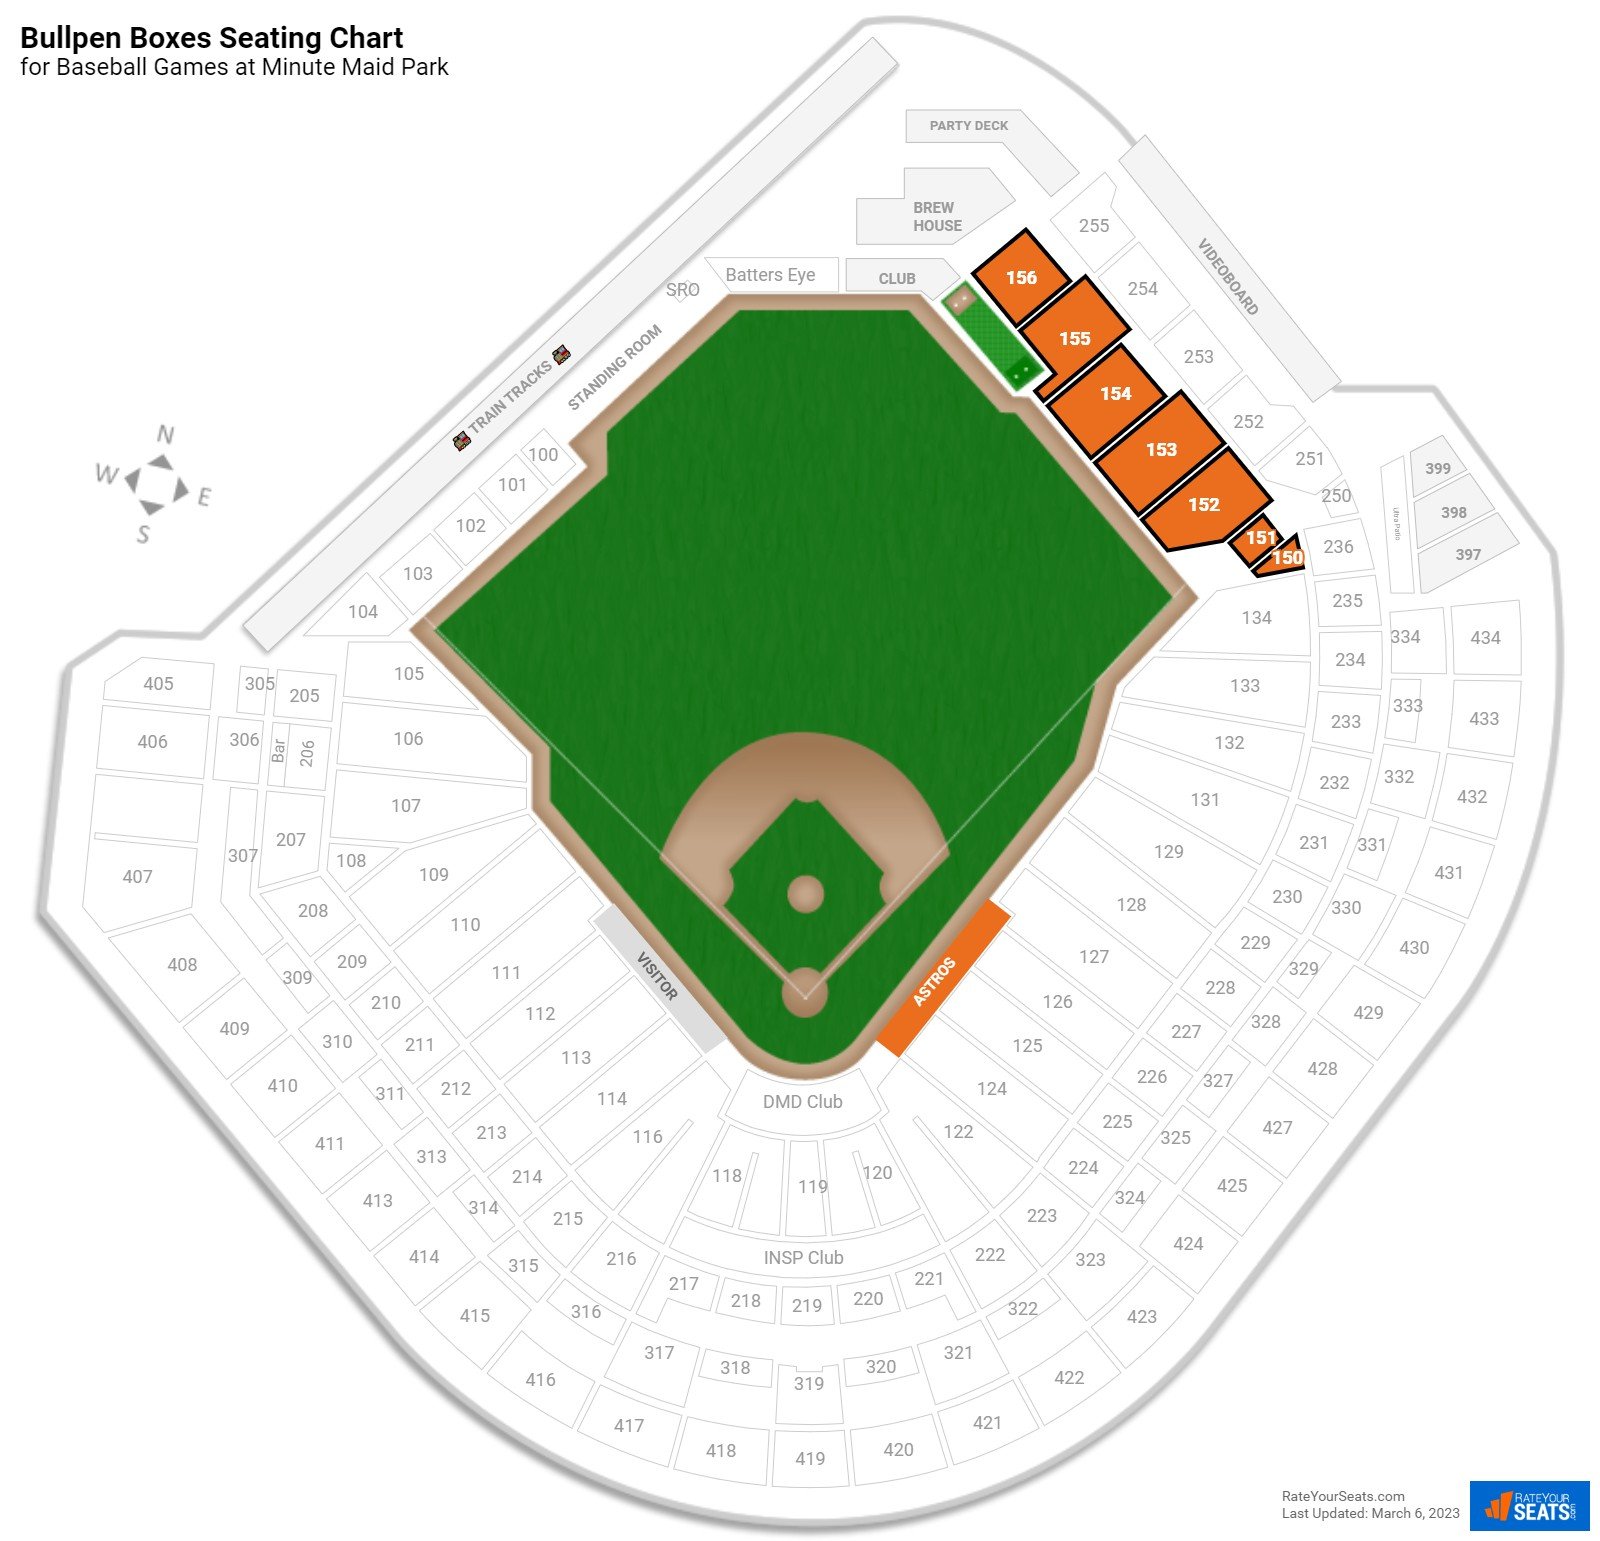 Baseball Bullpen Boxes Seating Chart at Minute Maid Park